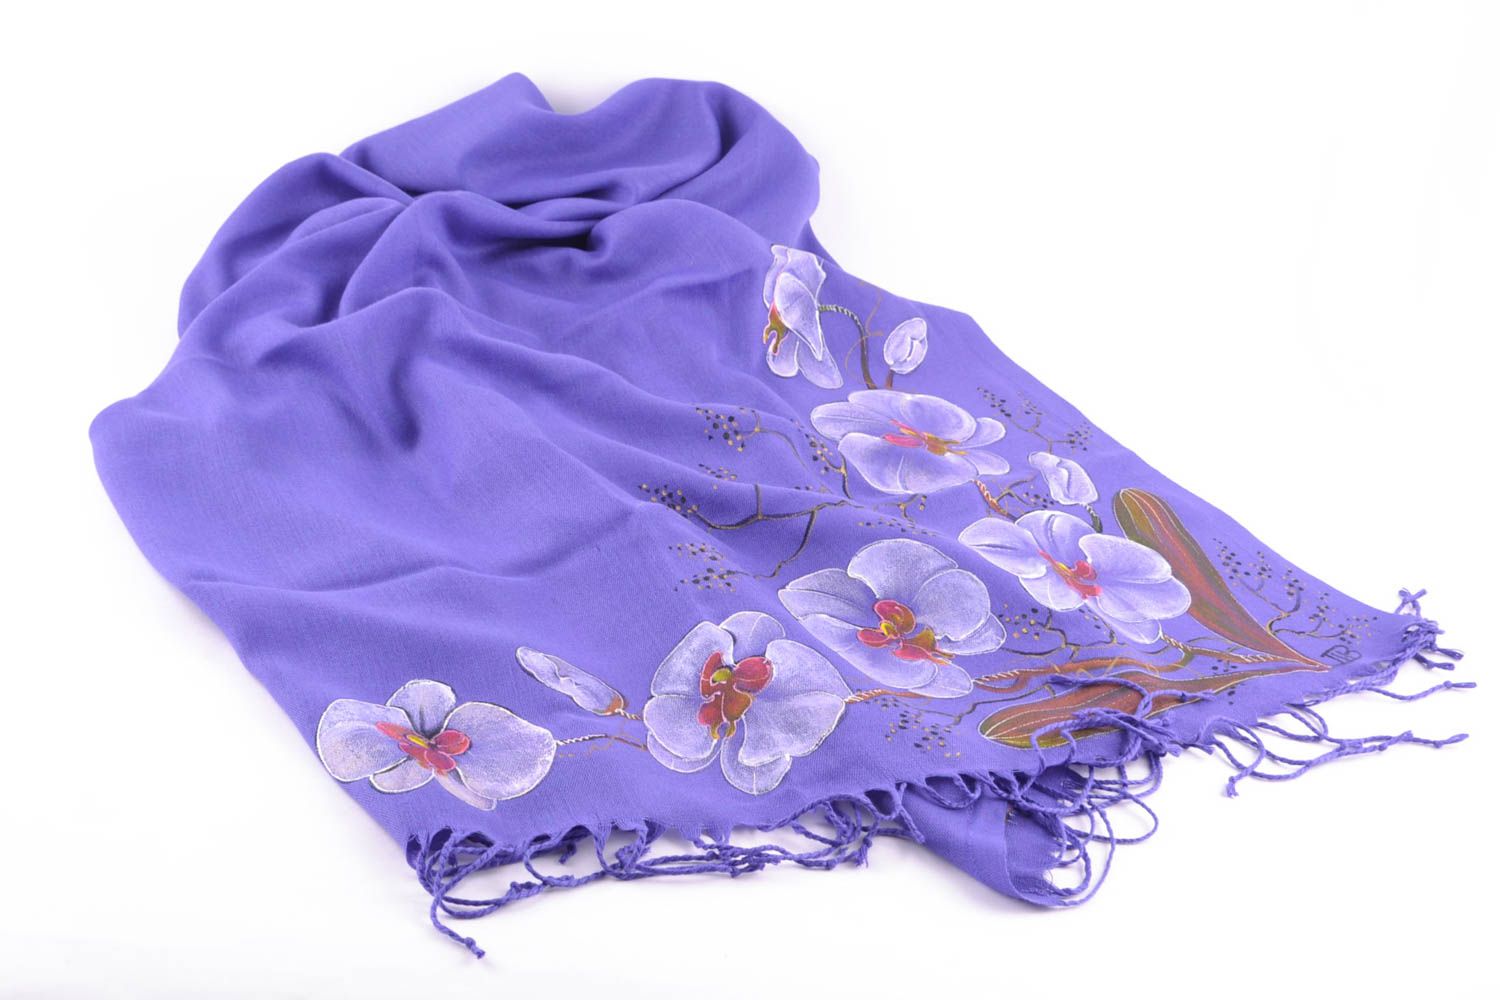 Demi-season violet cashmere shawl with flowers photo 4